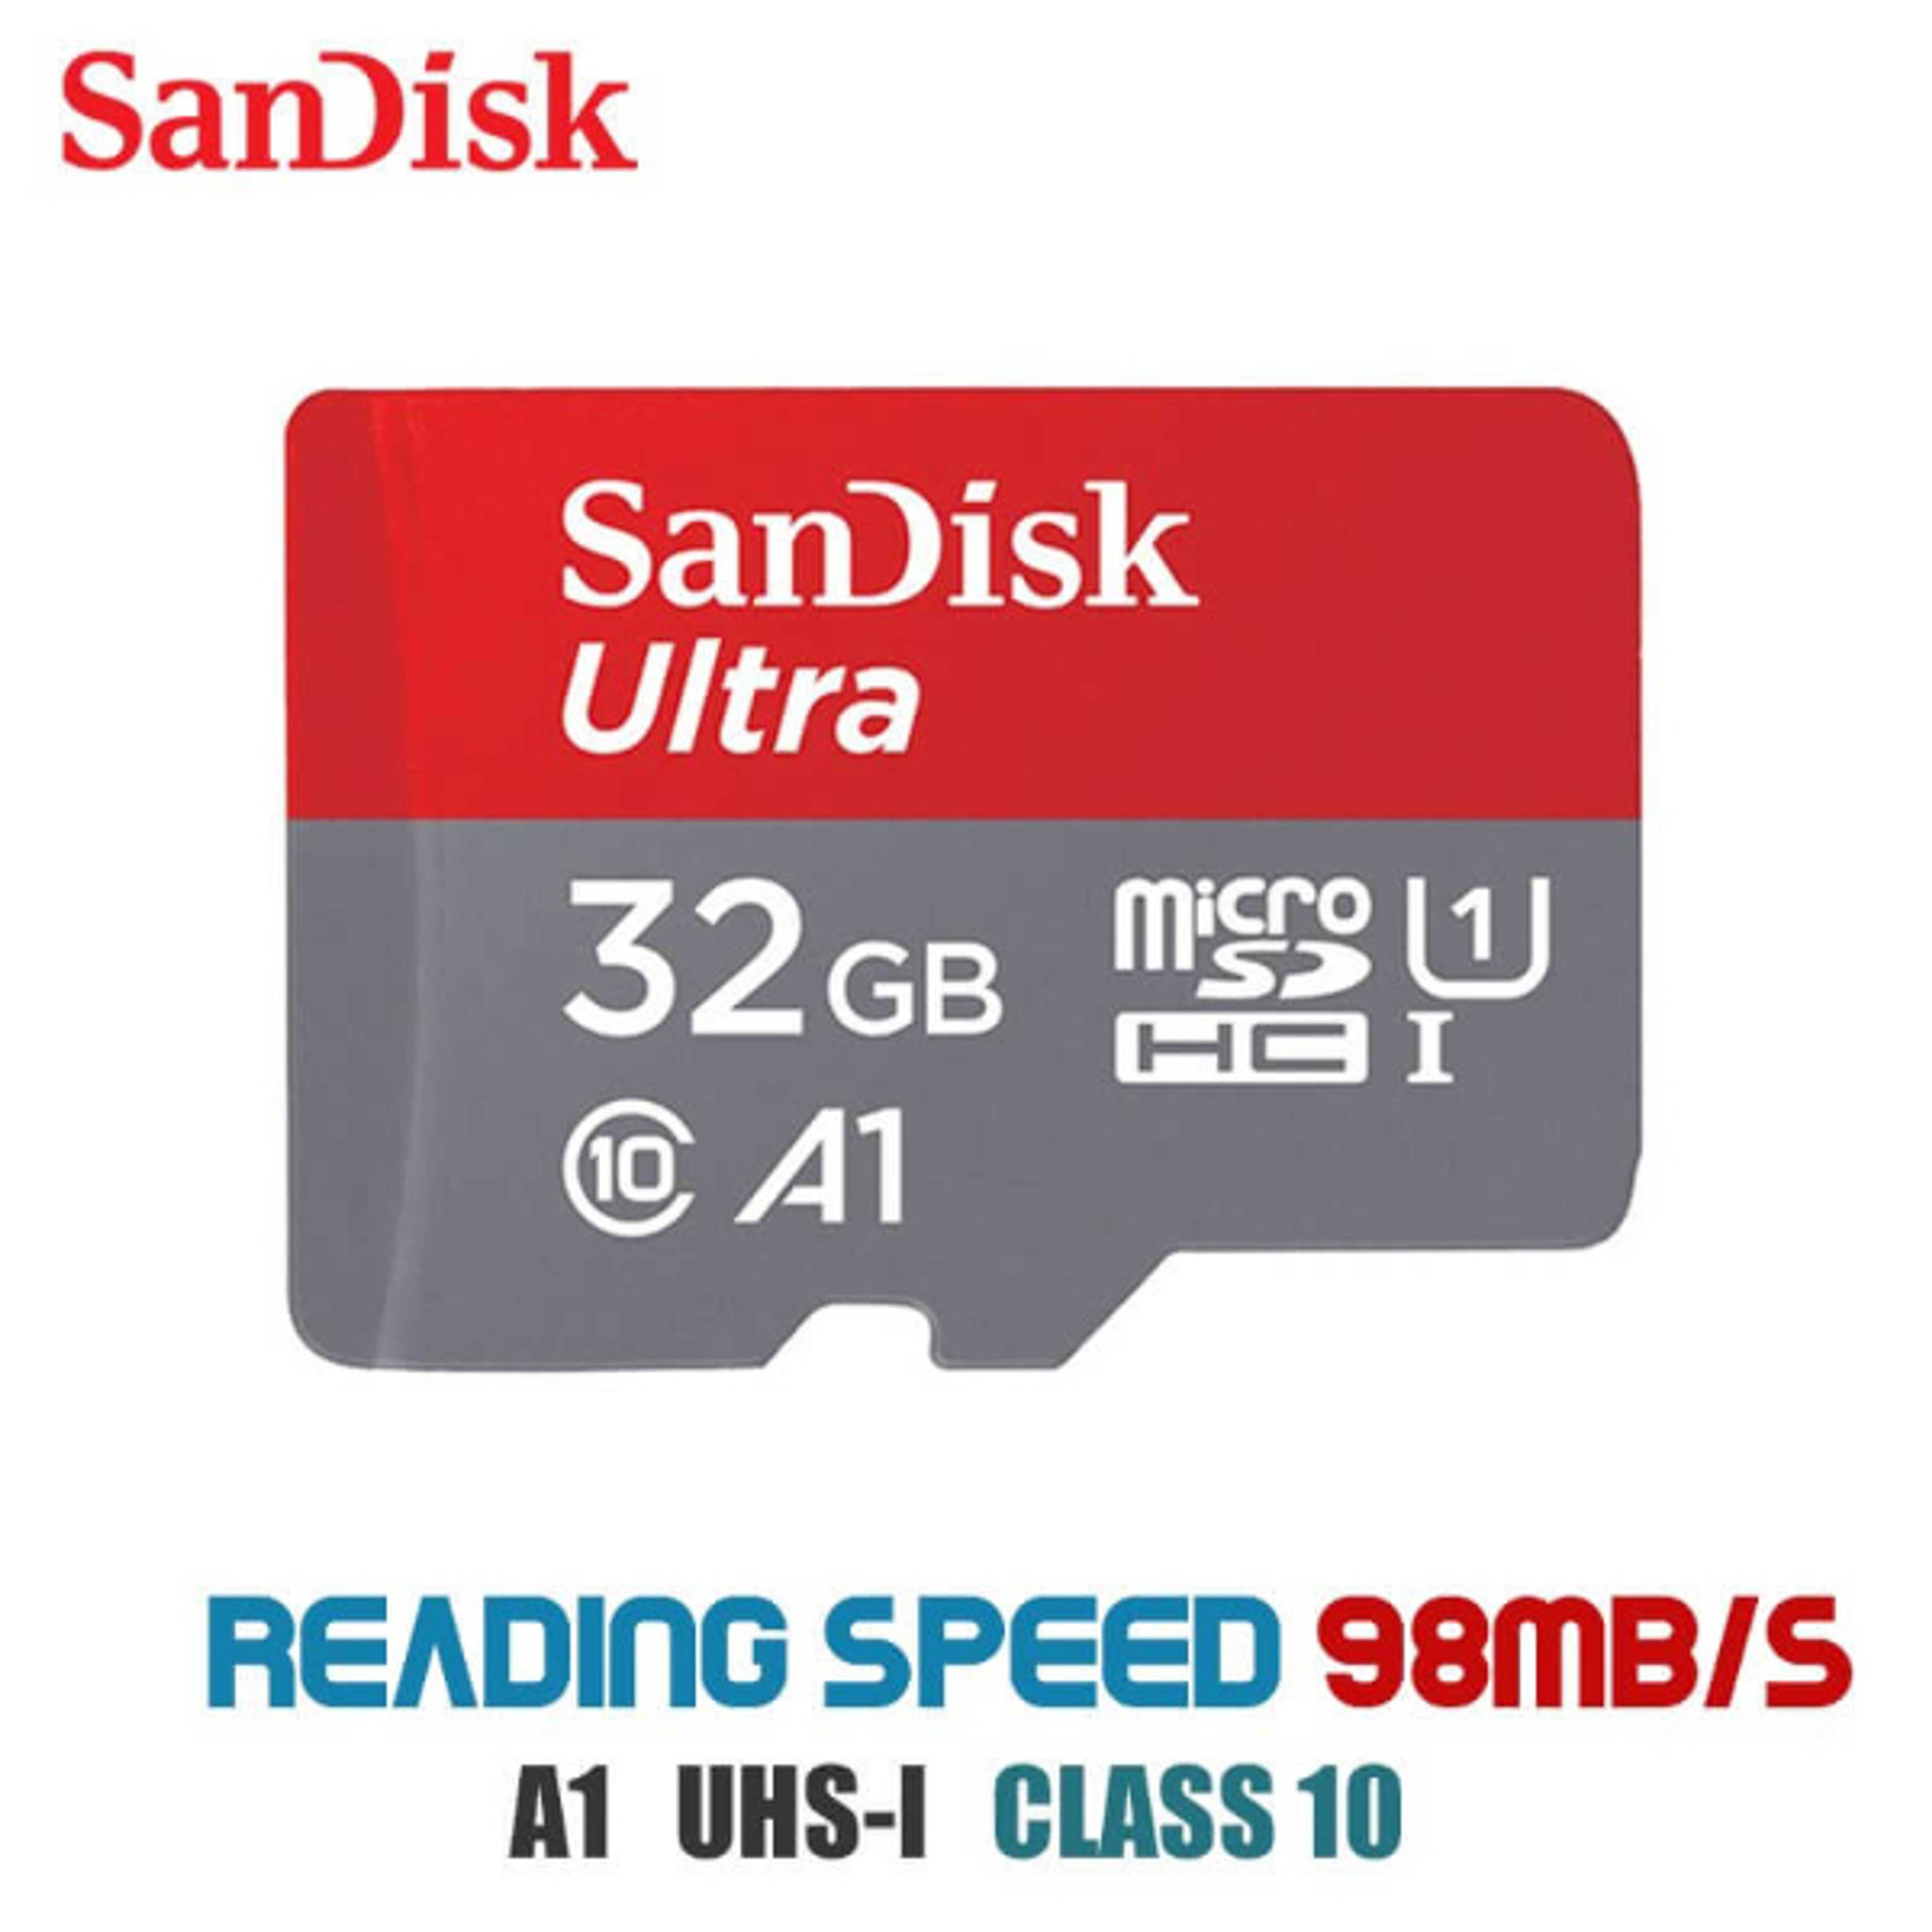 32gb Sandisk Ultra MicroSDHC USH-I Memory CardClass 1098mbps Speed